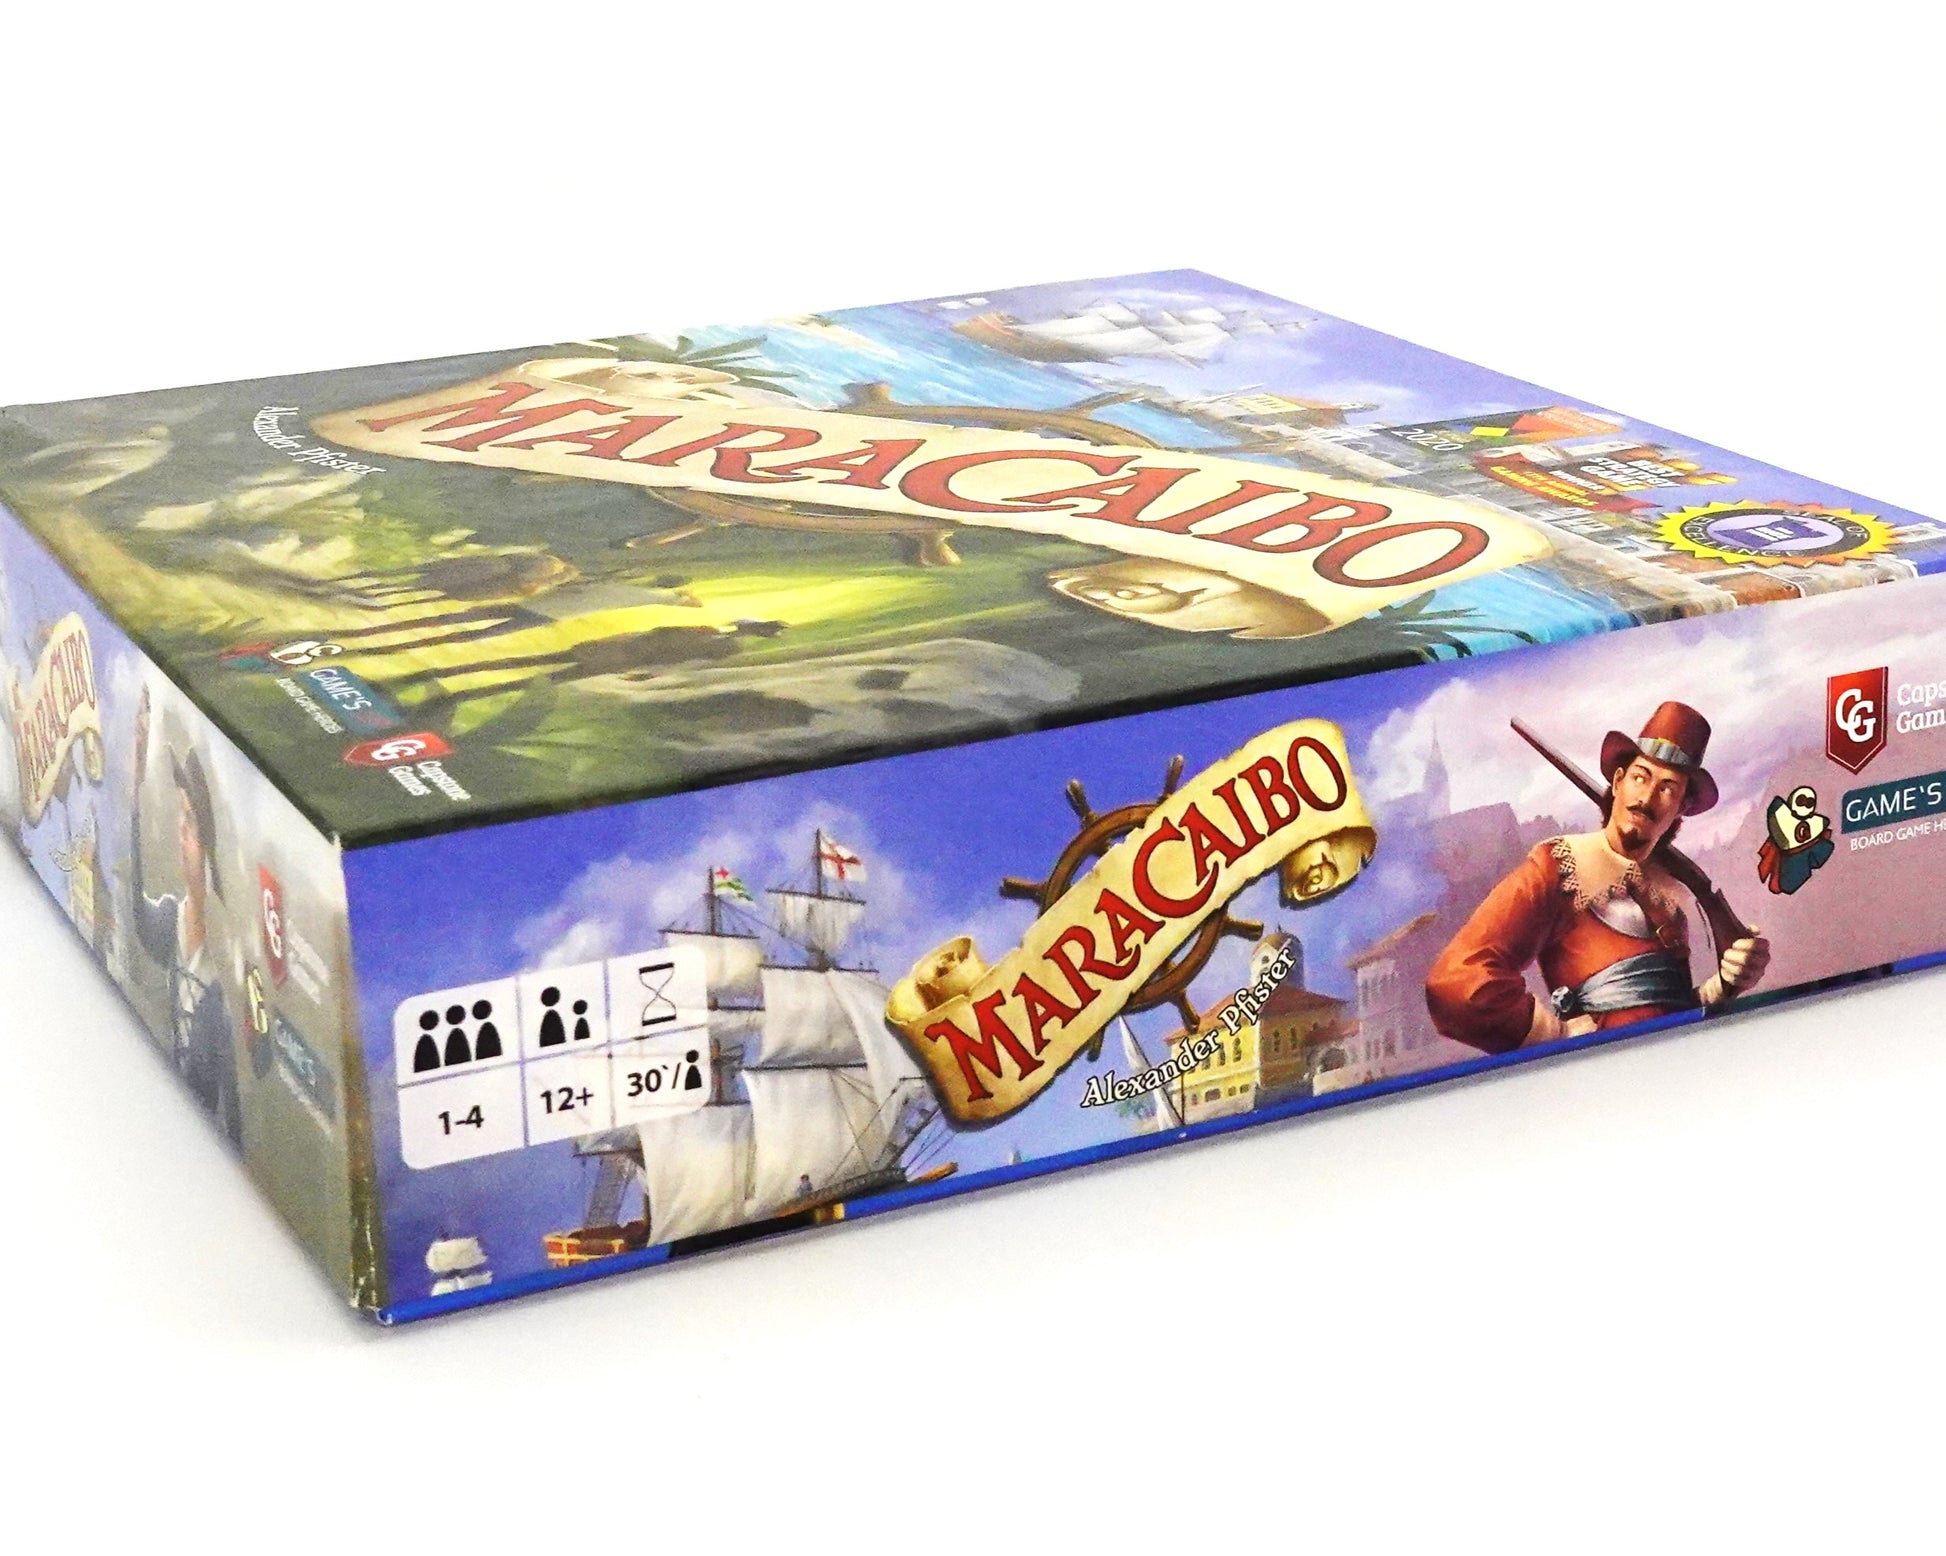 Maracaibo board game